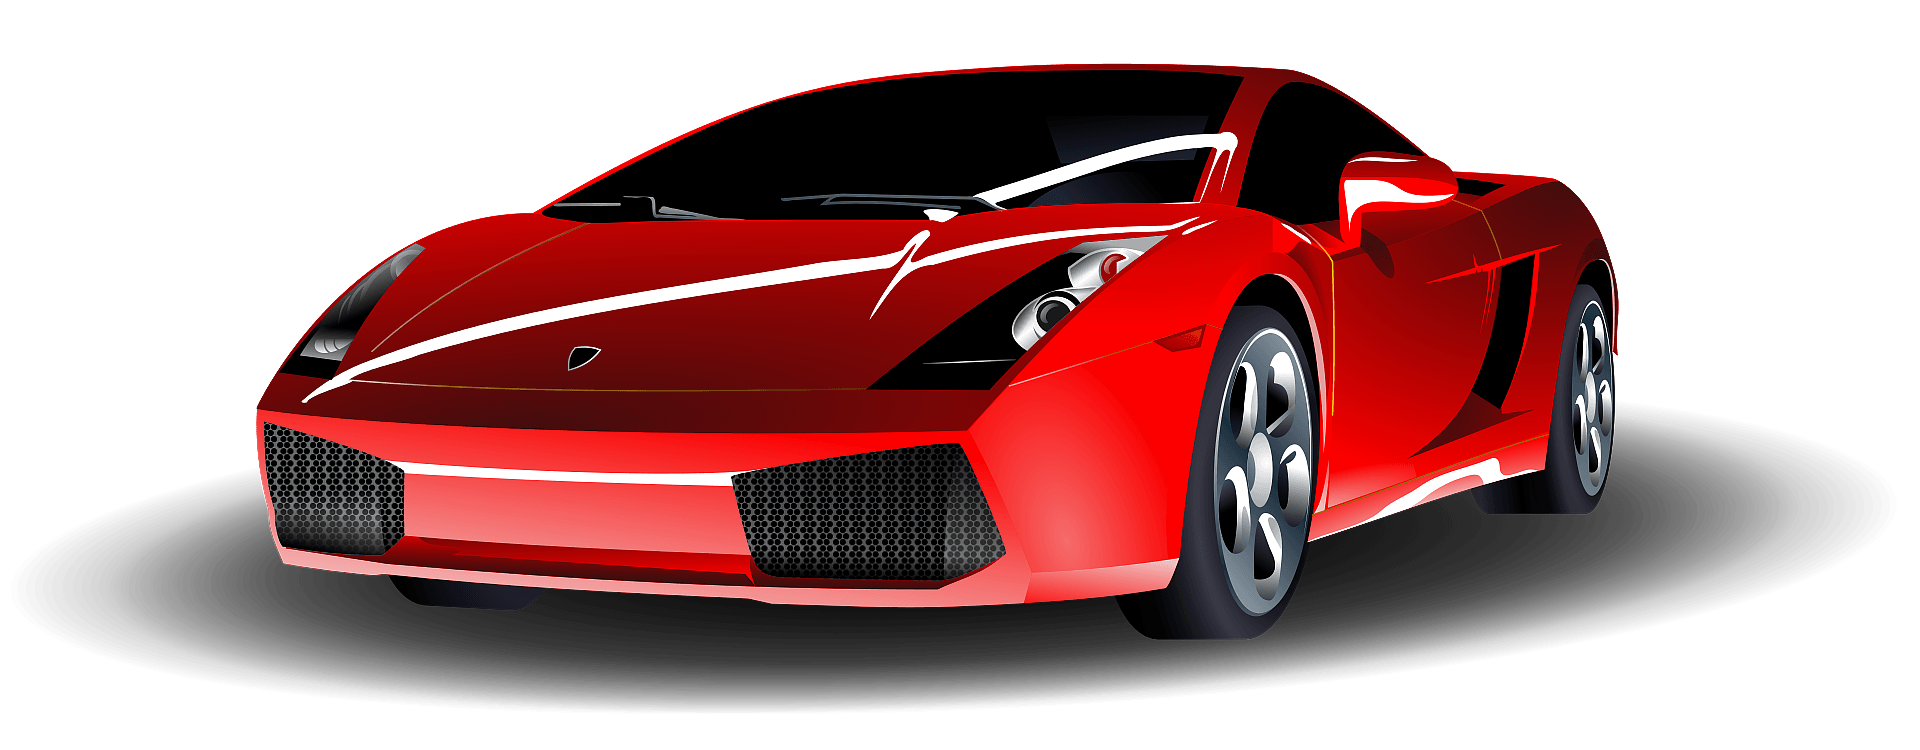 Lamborghini Vector Pic Red Free HD Image PNG Image